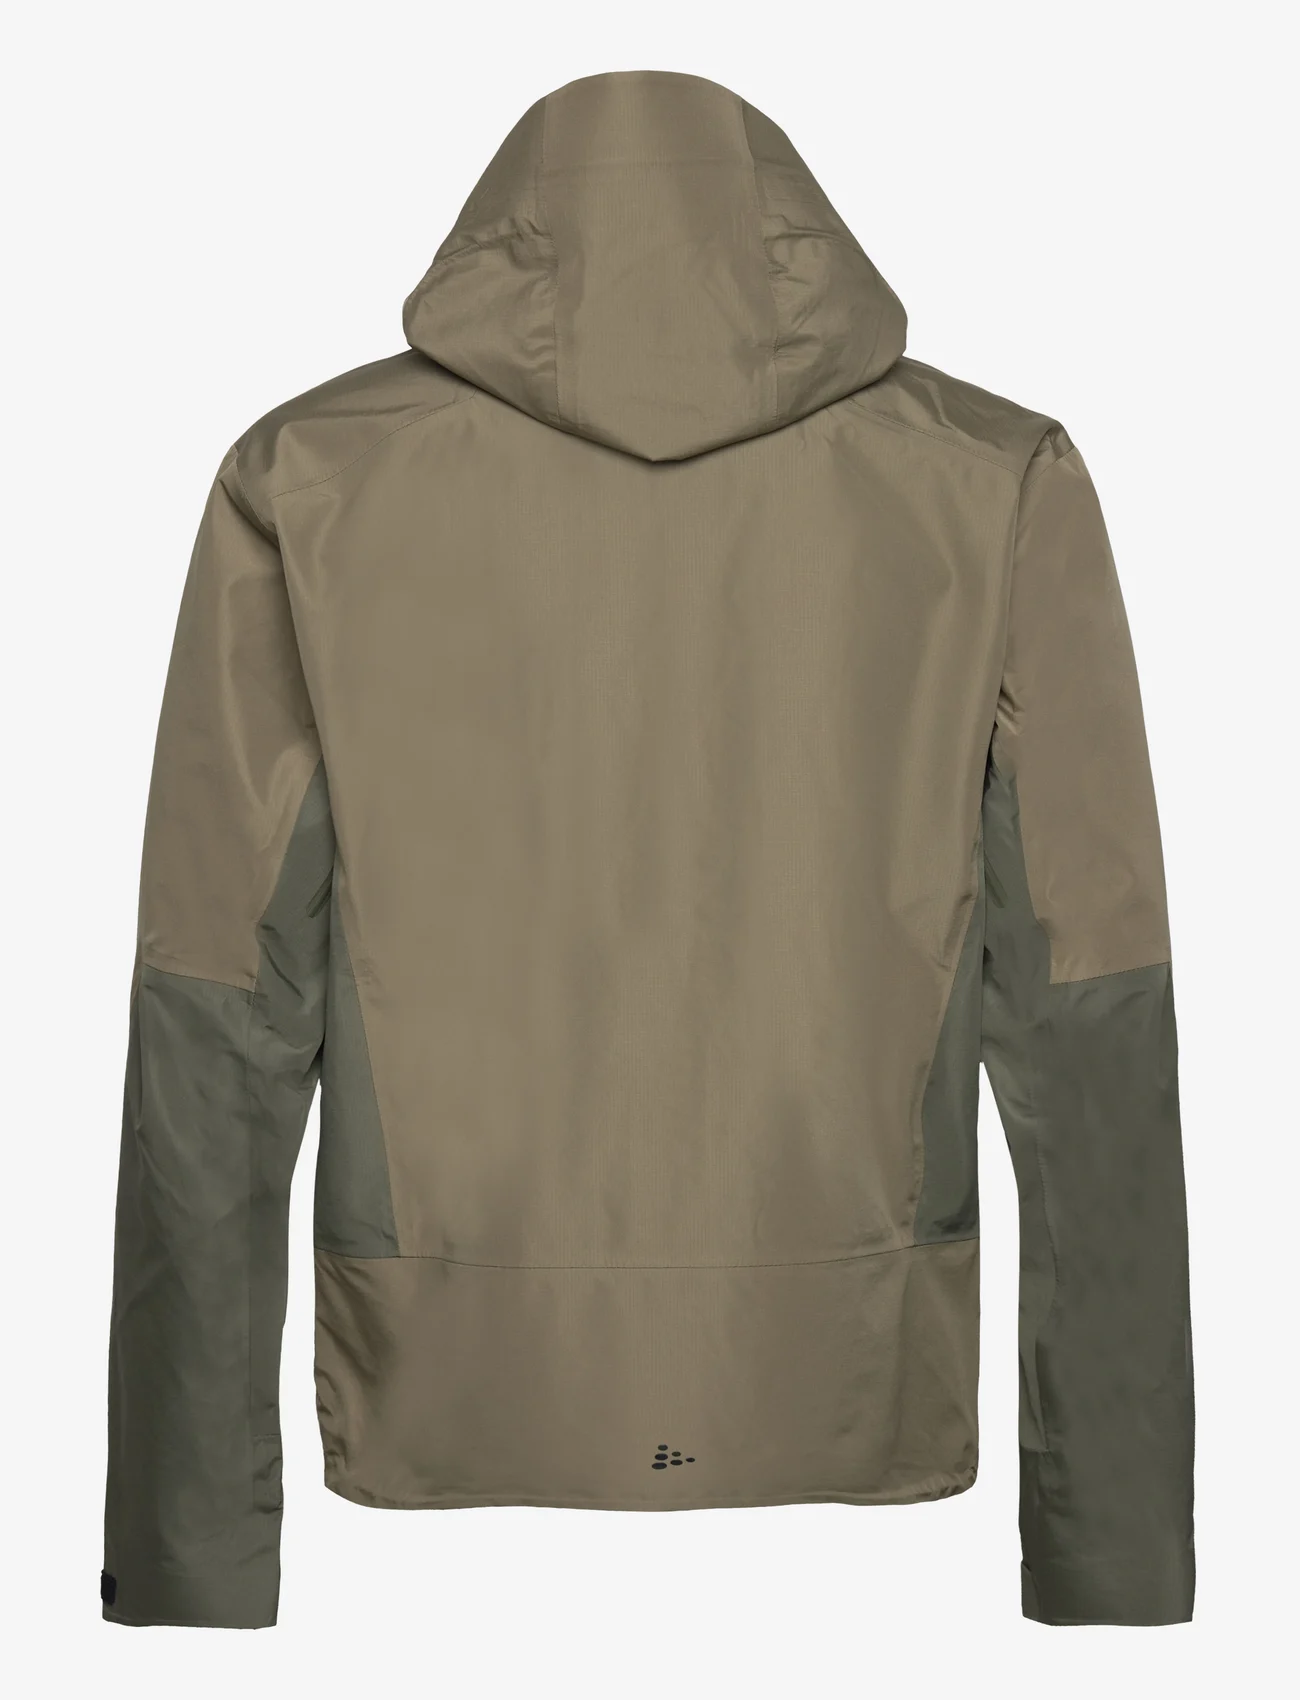 Craft - Adv Explore Shell Jacket M - ski jackets - rift - 1